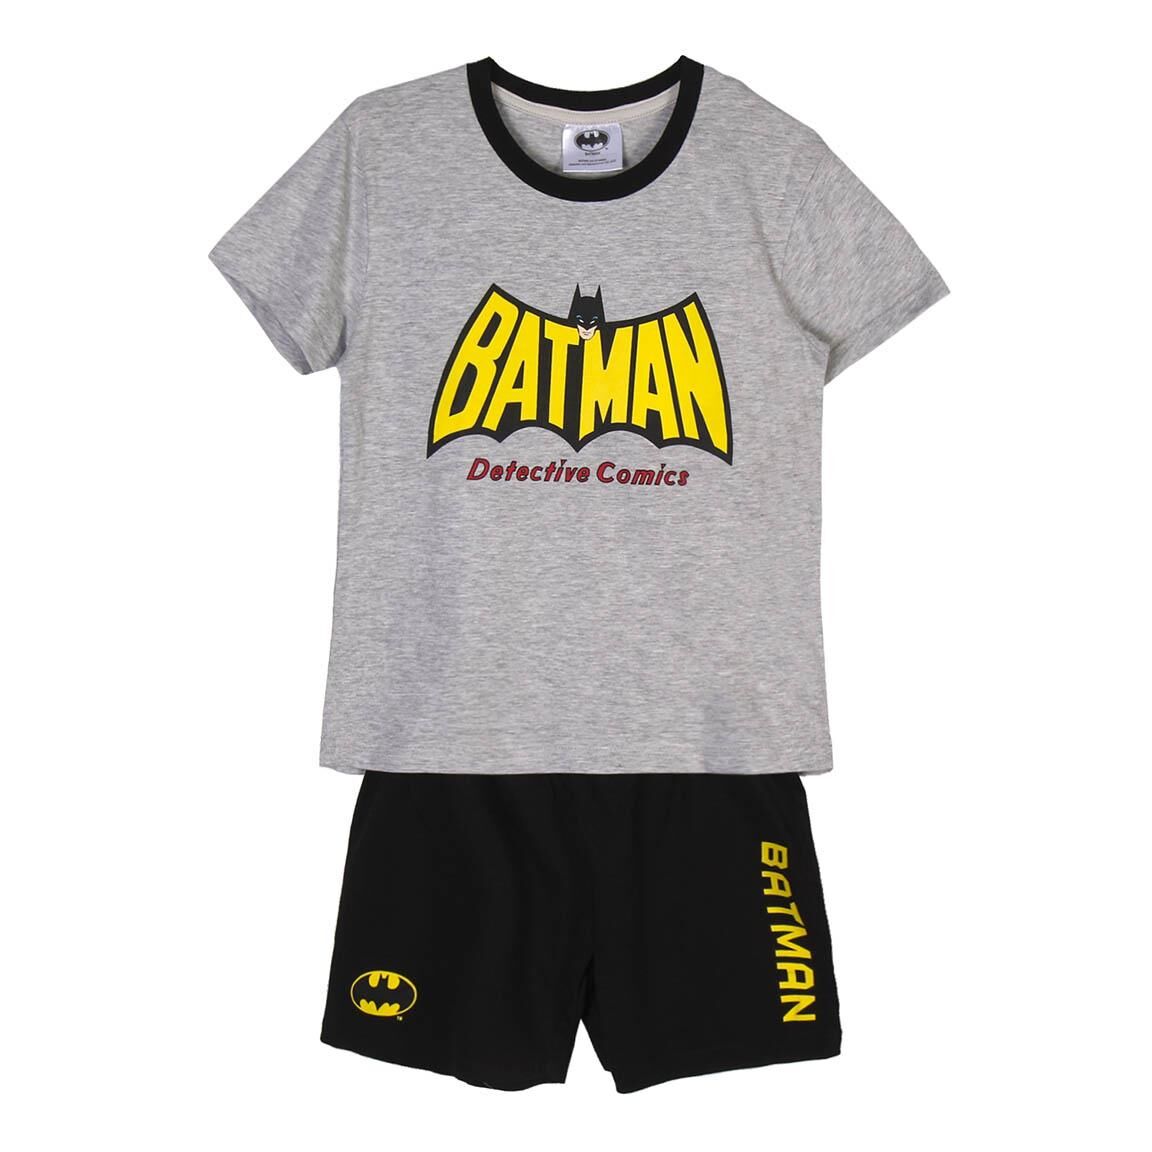 Conjunto pijama Batman DC Comics de CERDÁ - Frikibase.com